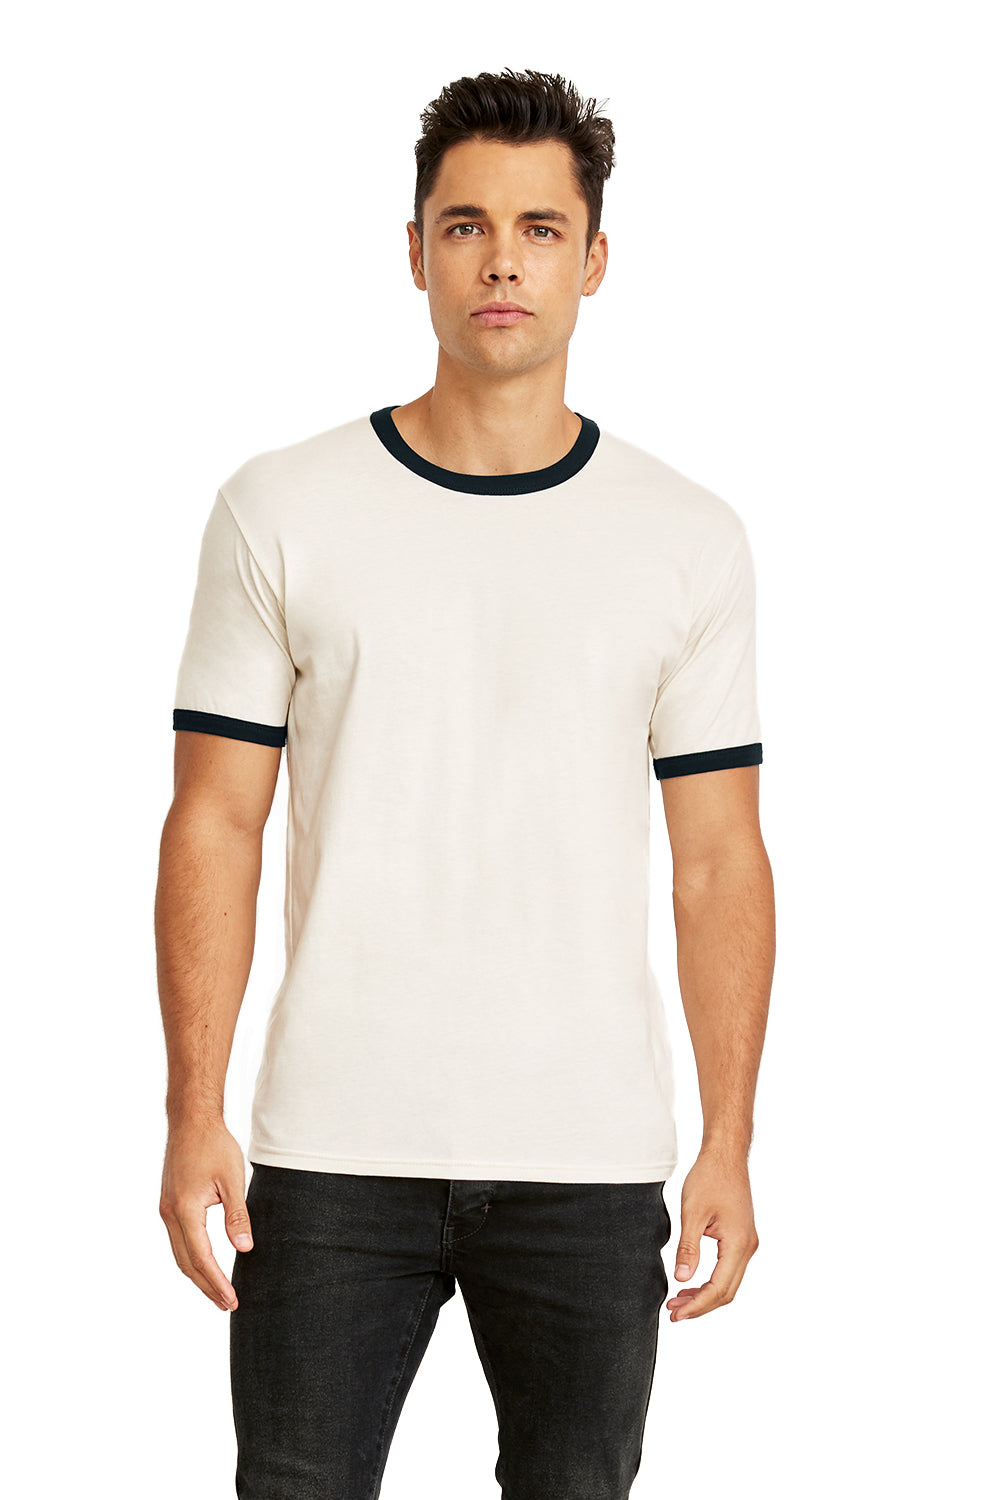 Next Level 3604 Mens Fine Jersey Ringer Short Sleeve Crewneck T-Shirt White/Black Front